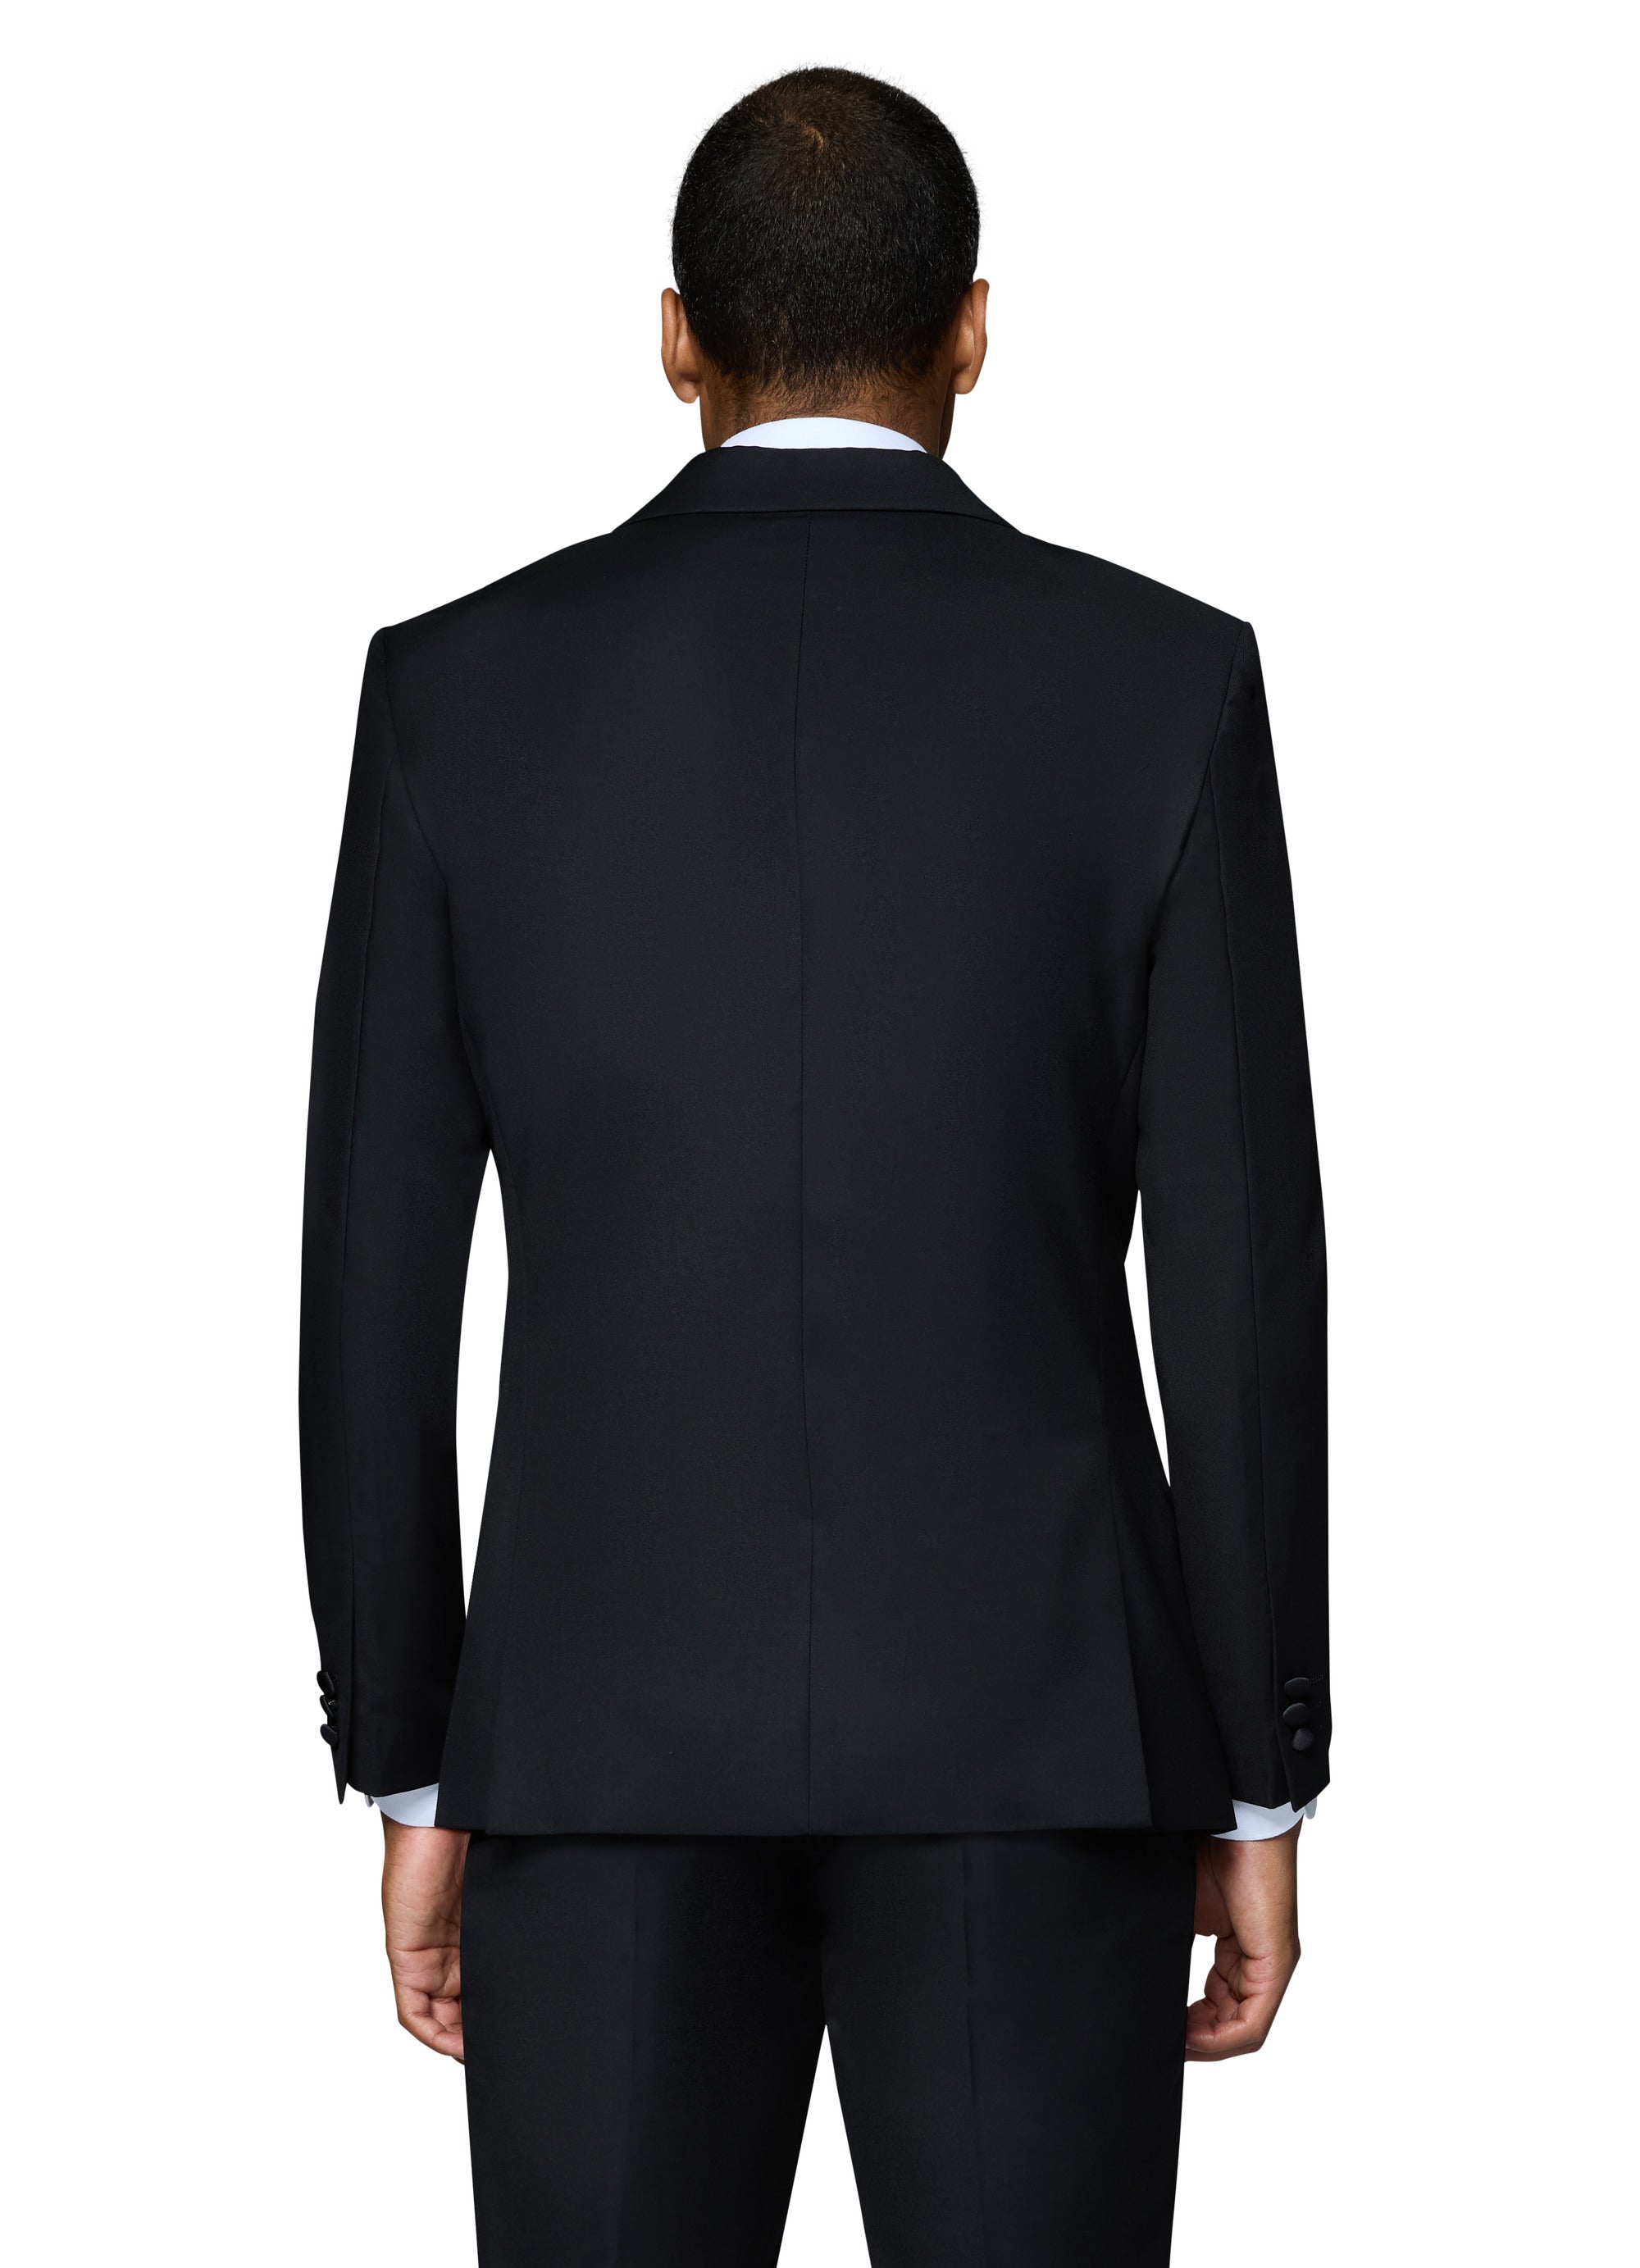 Berragamo Solid Black Notch Tuxedo Modern Fit